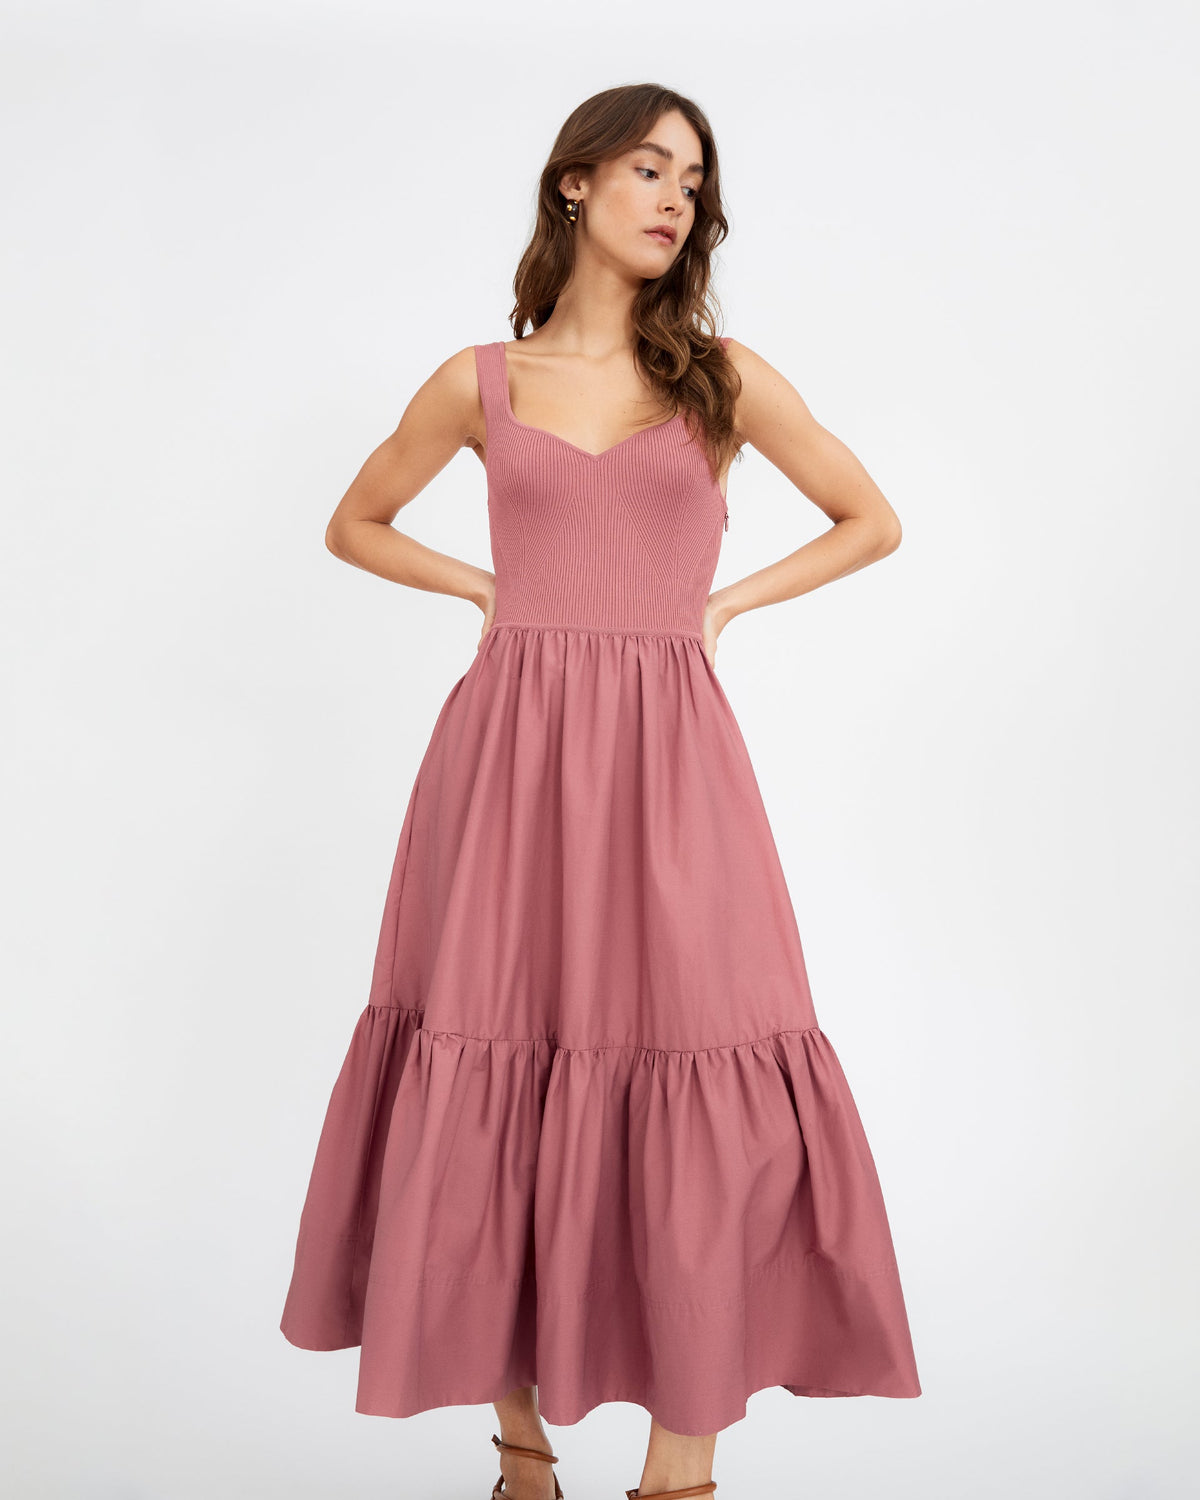 Josephina Dress in Cool Rose